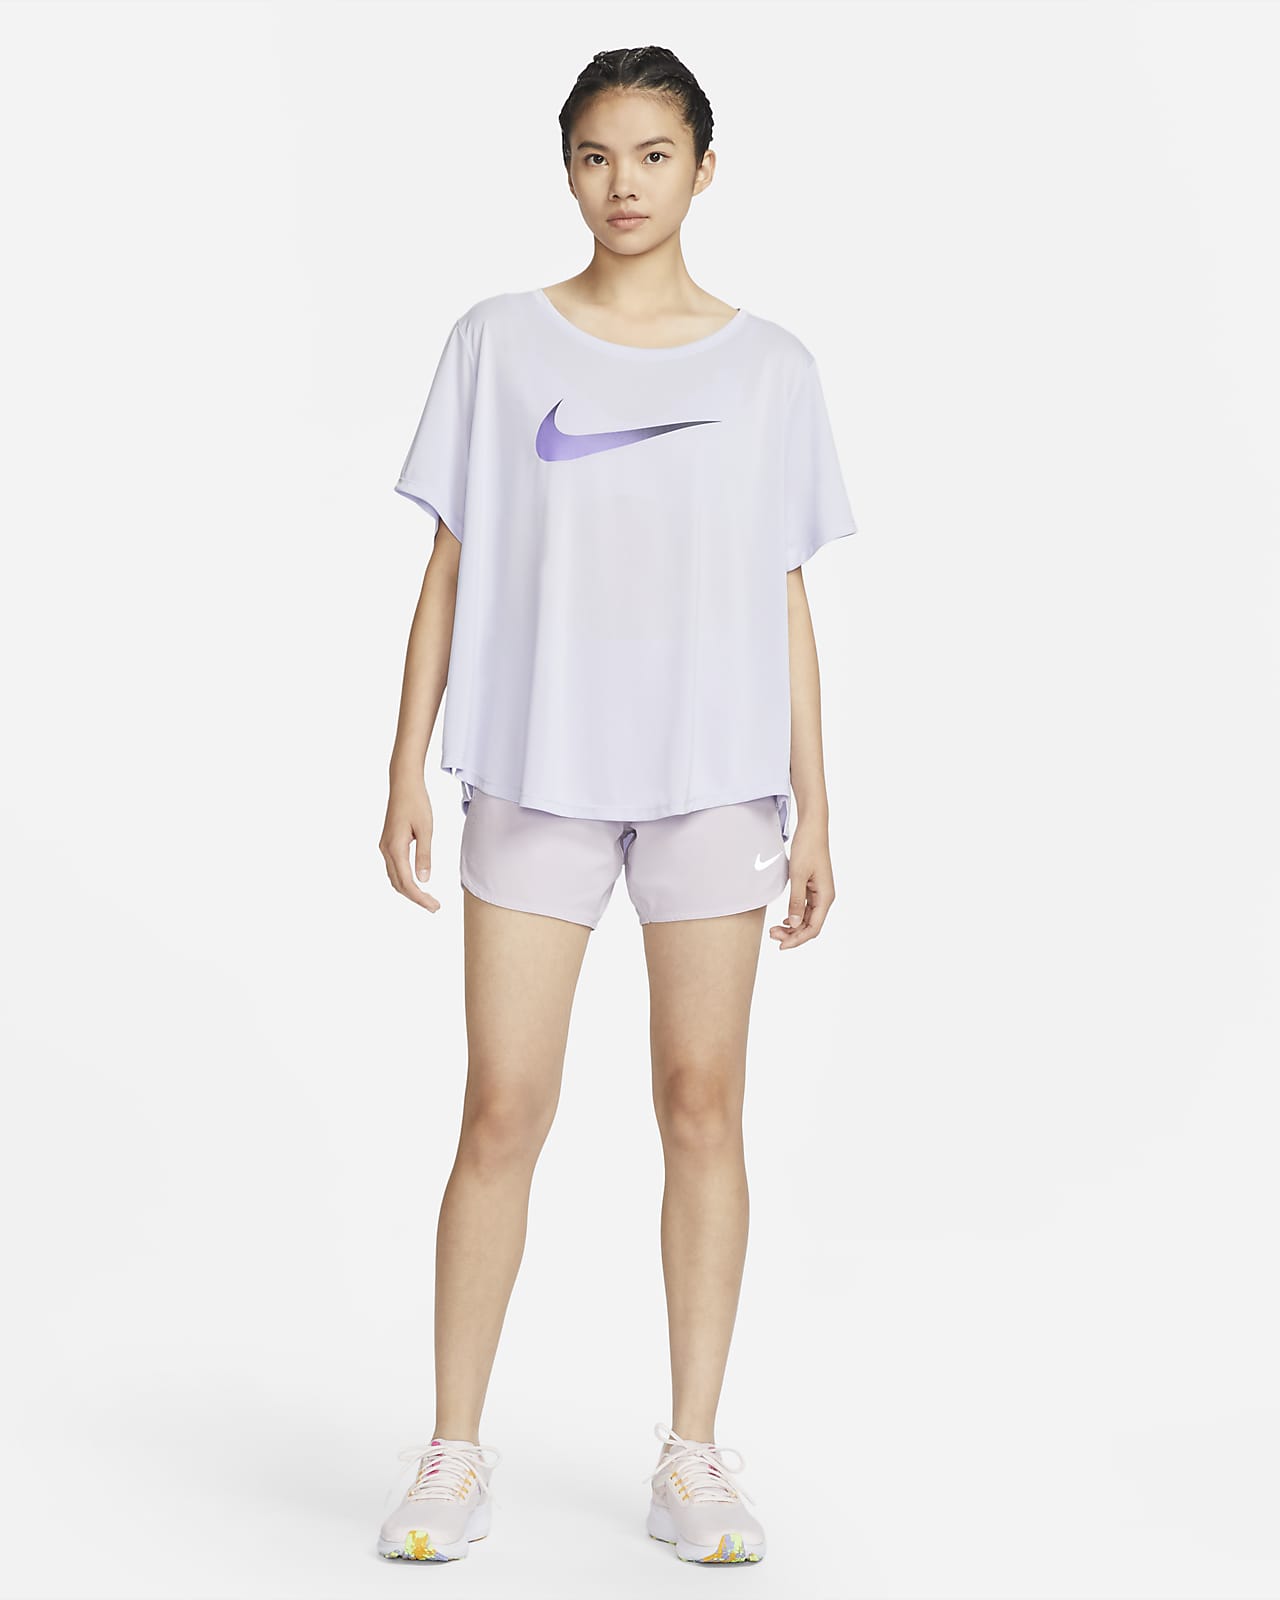 One Short-Sleeve (Plus Dri-FIT Nike Running Nike Size). ID Top Women\'s